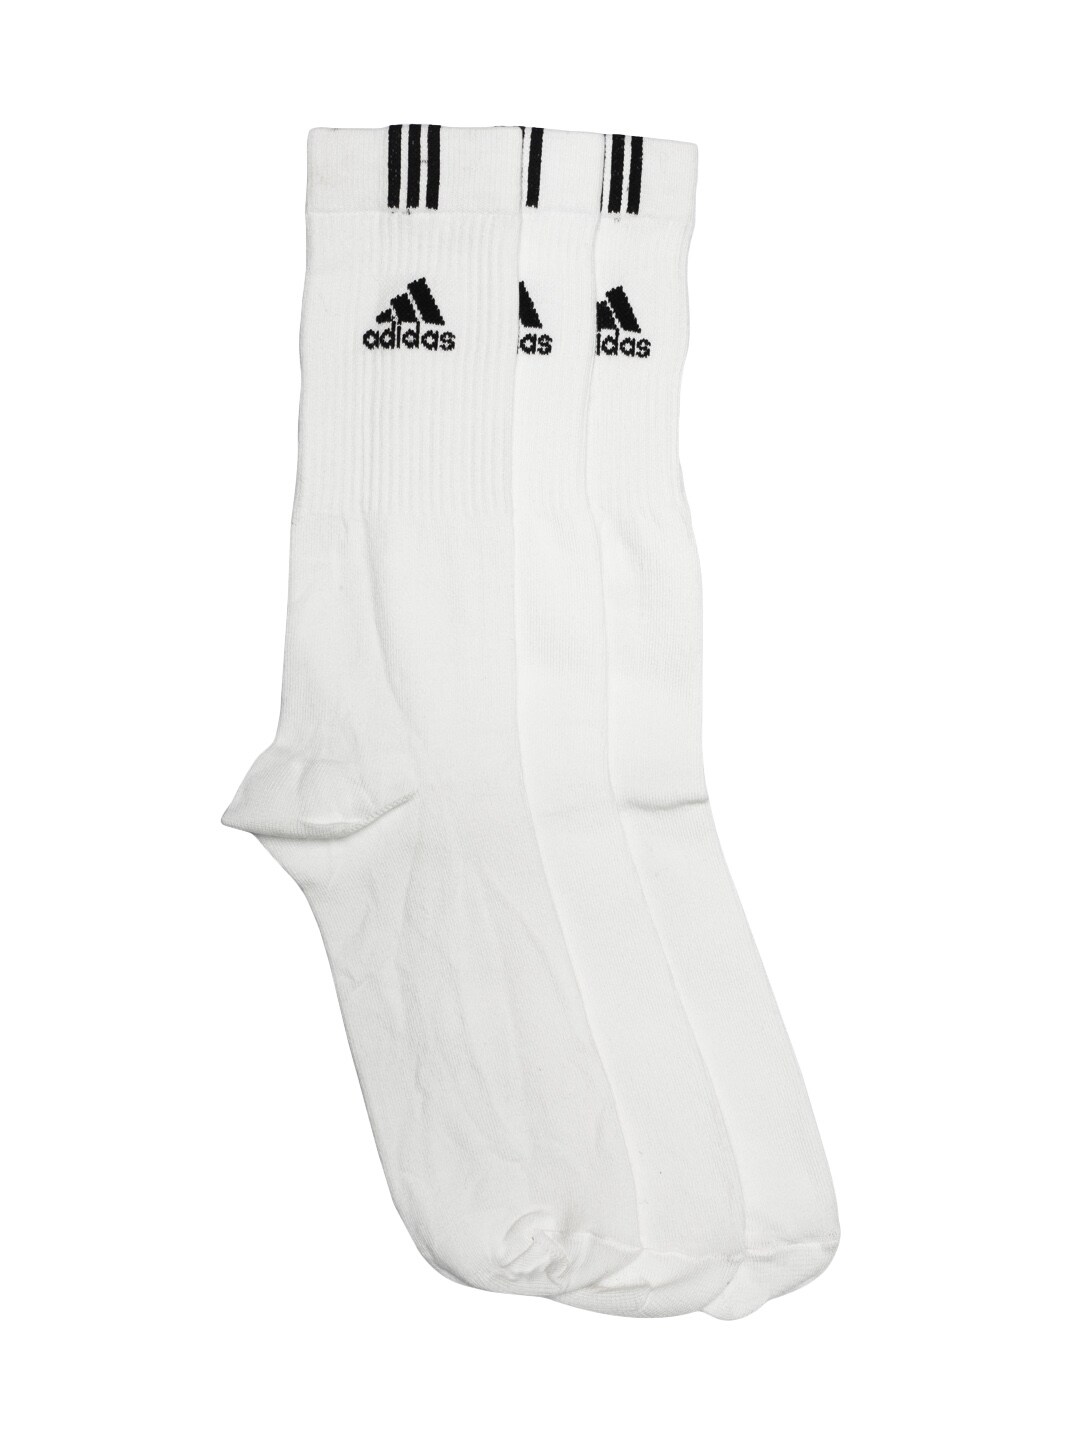 ADIDAS Unisex White Pack of 3 Socks